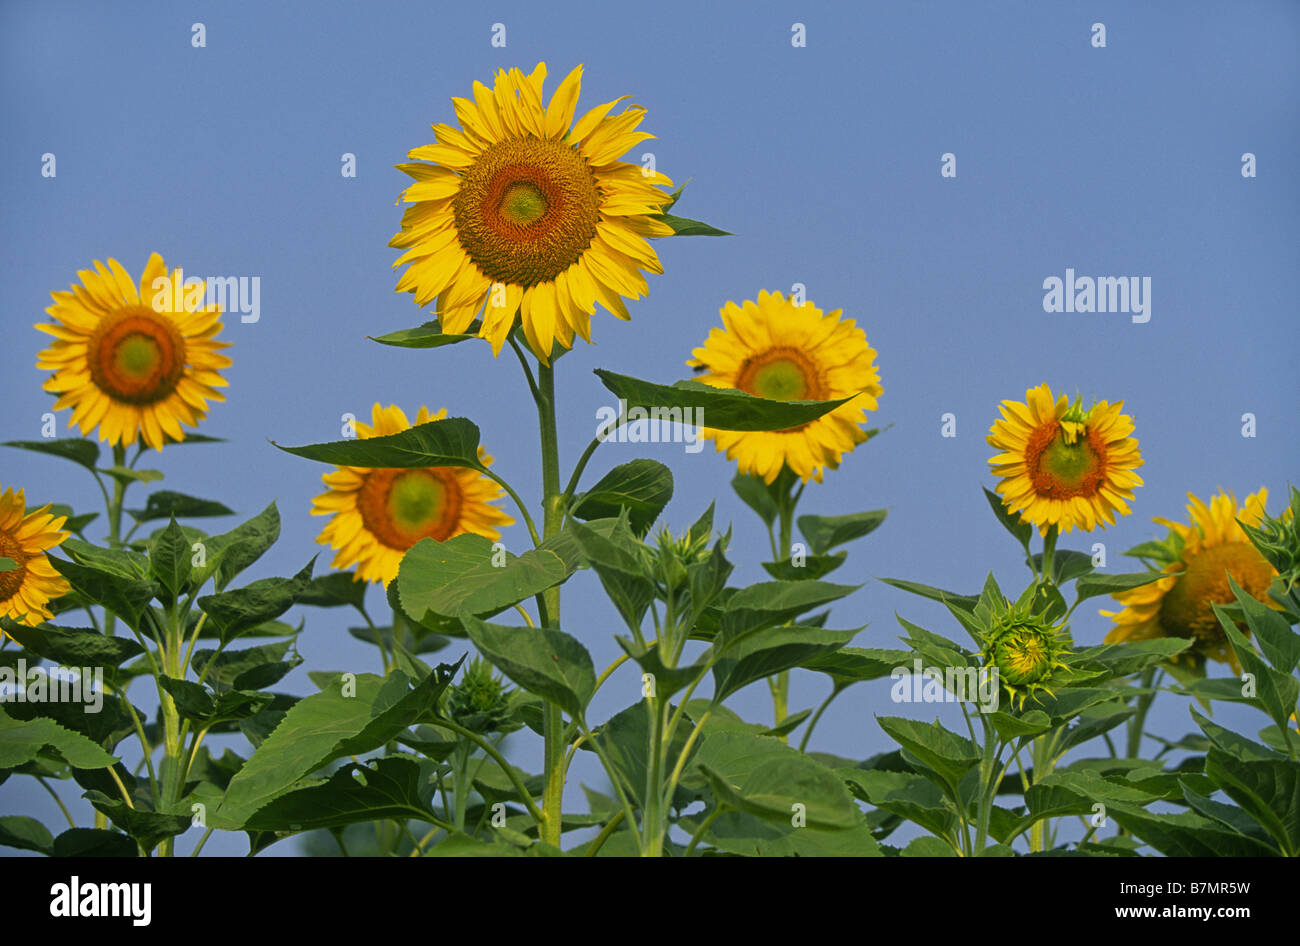 A field of sunflowers underneath a blue summer sky Stock Photo